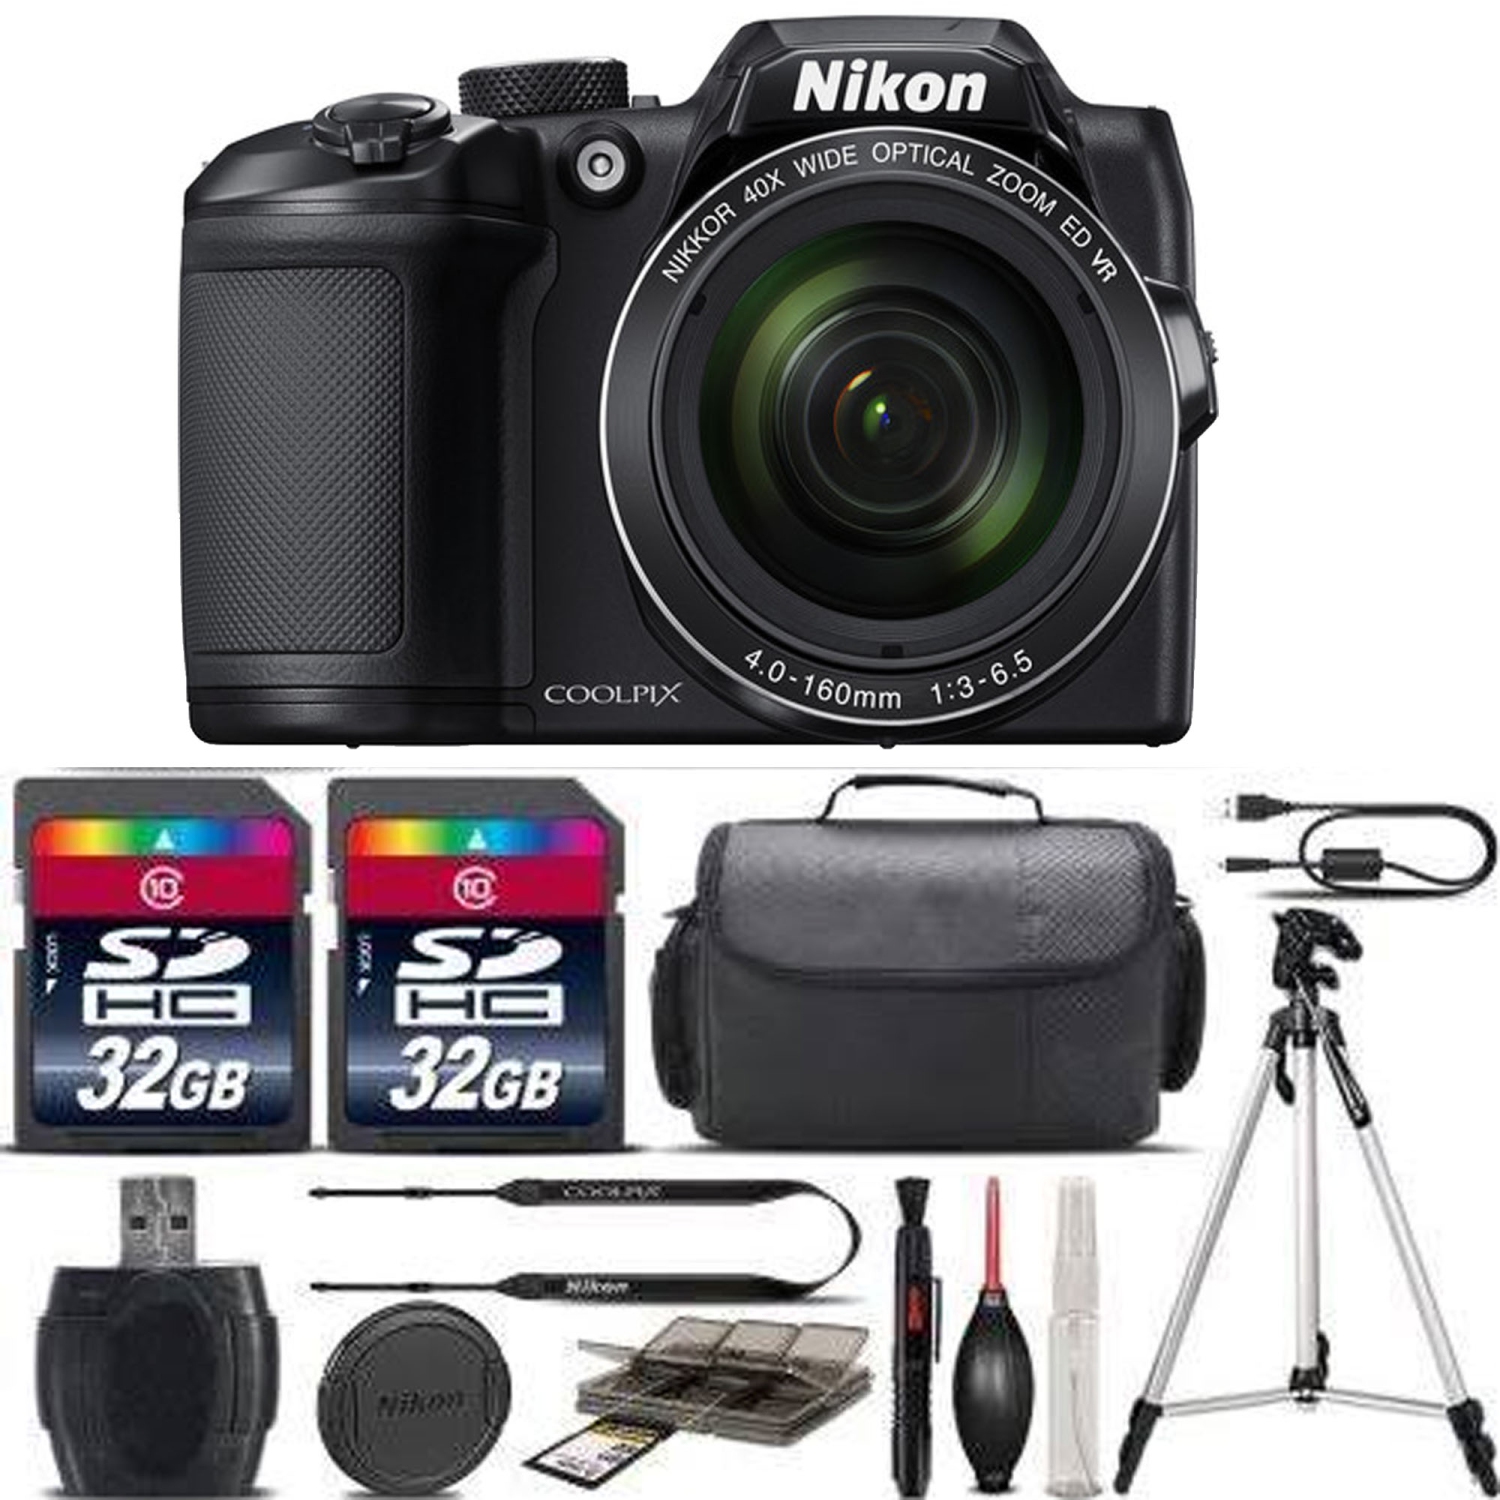 Nikon Coolpix B500 Digital 40x Optical Zoom Camera Black + 64GB Storage + Case - US Version w/ Seller Warranty